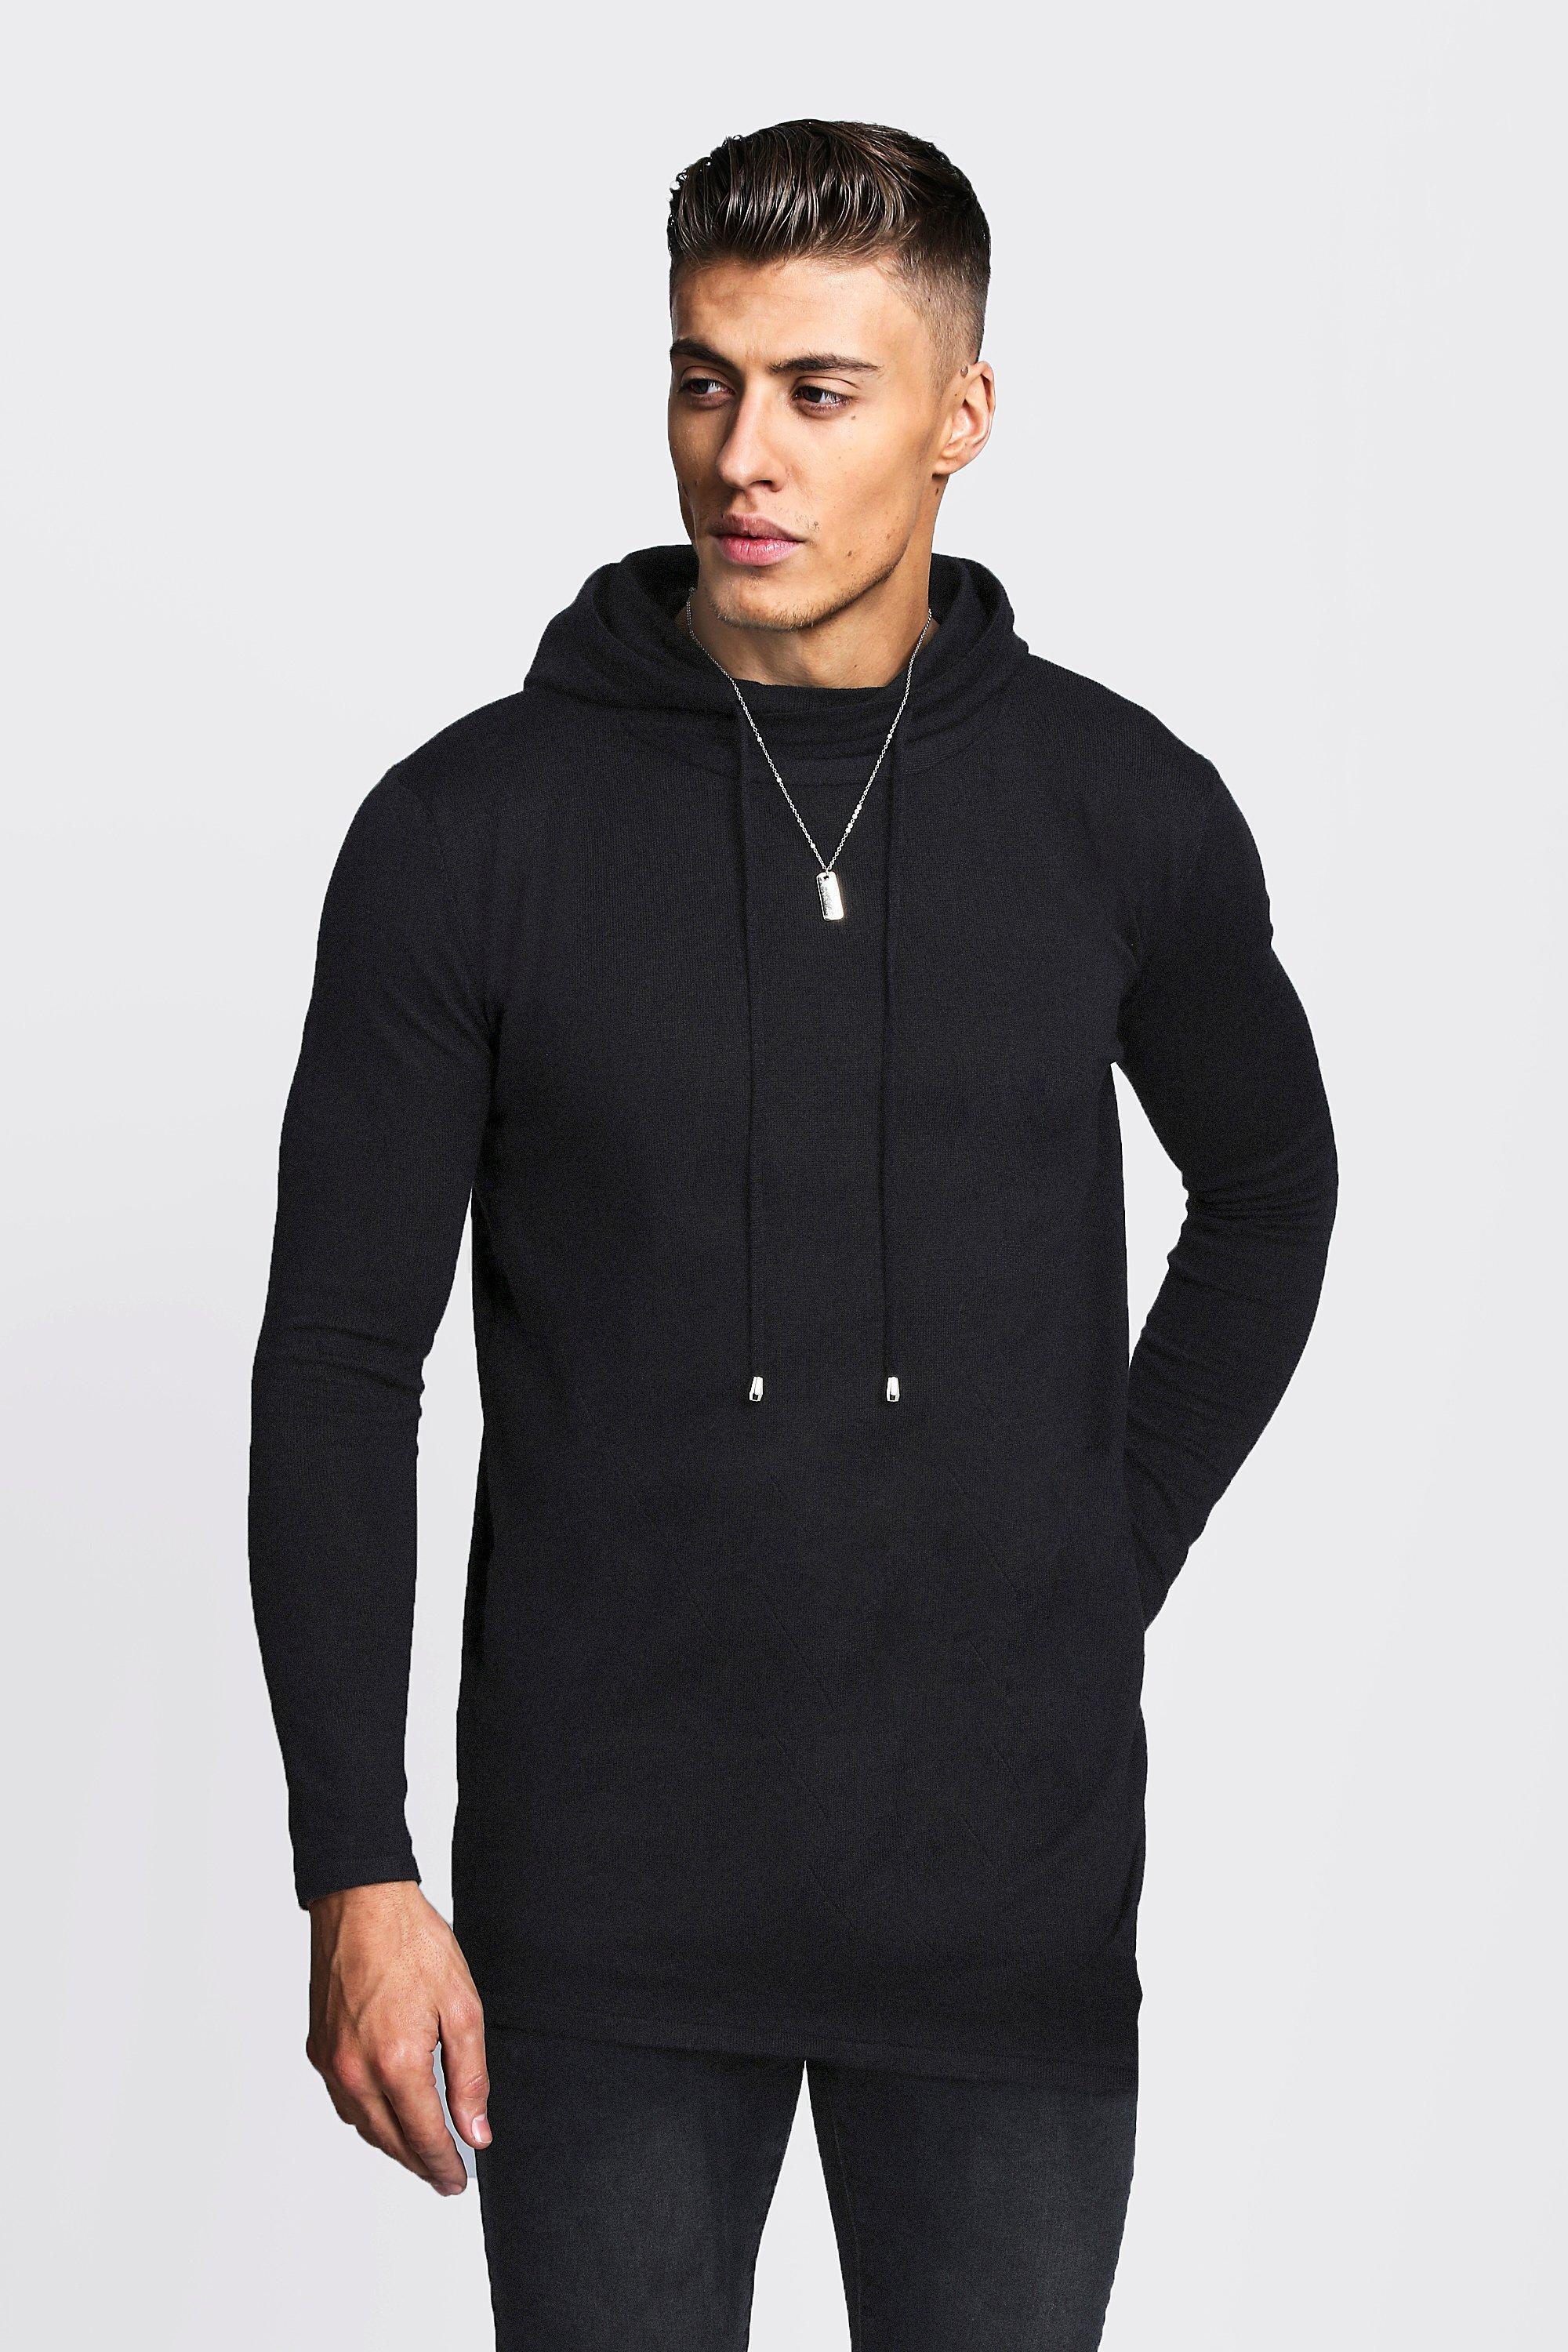 Lyst - BoohooMAN Knitted Longline Hoodie in Black for Men